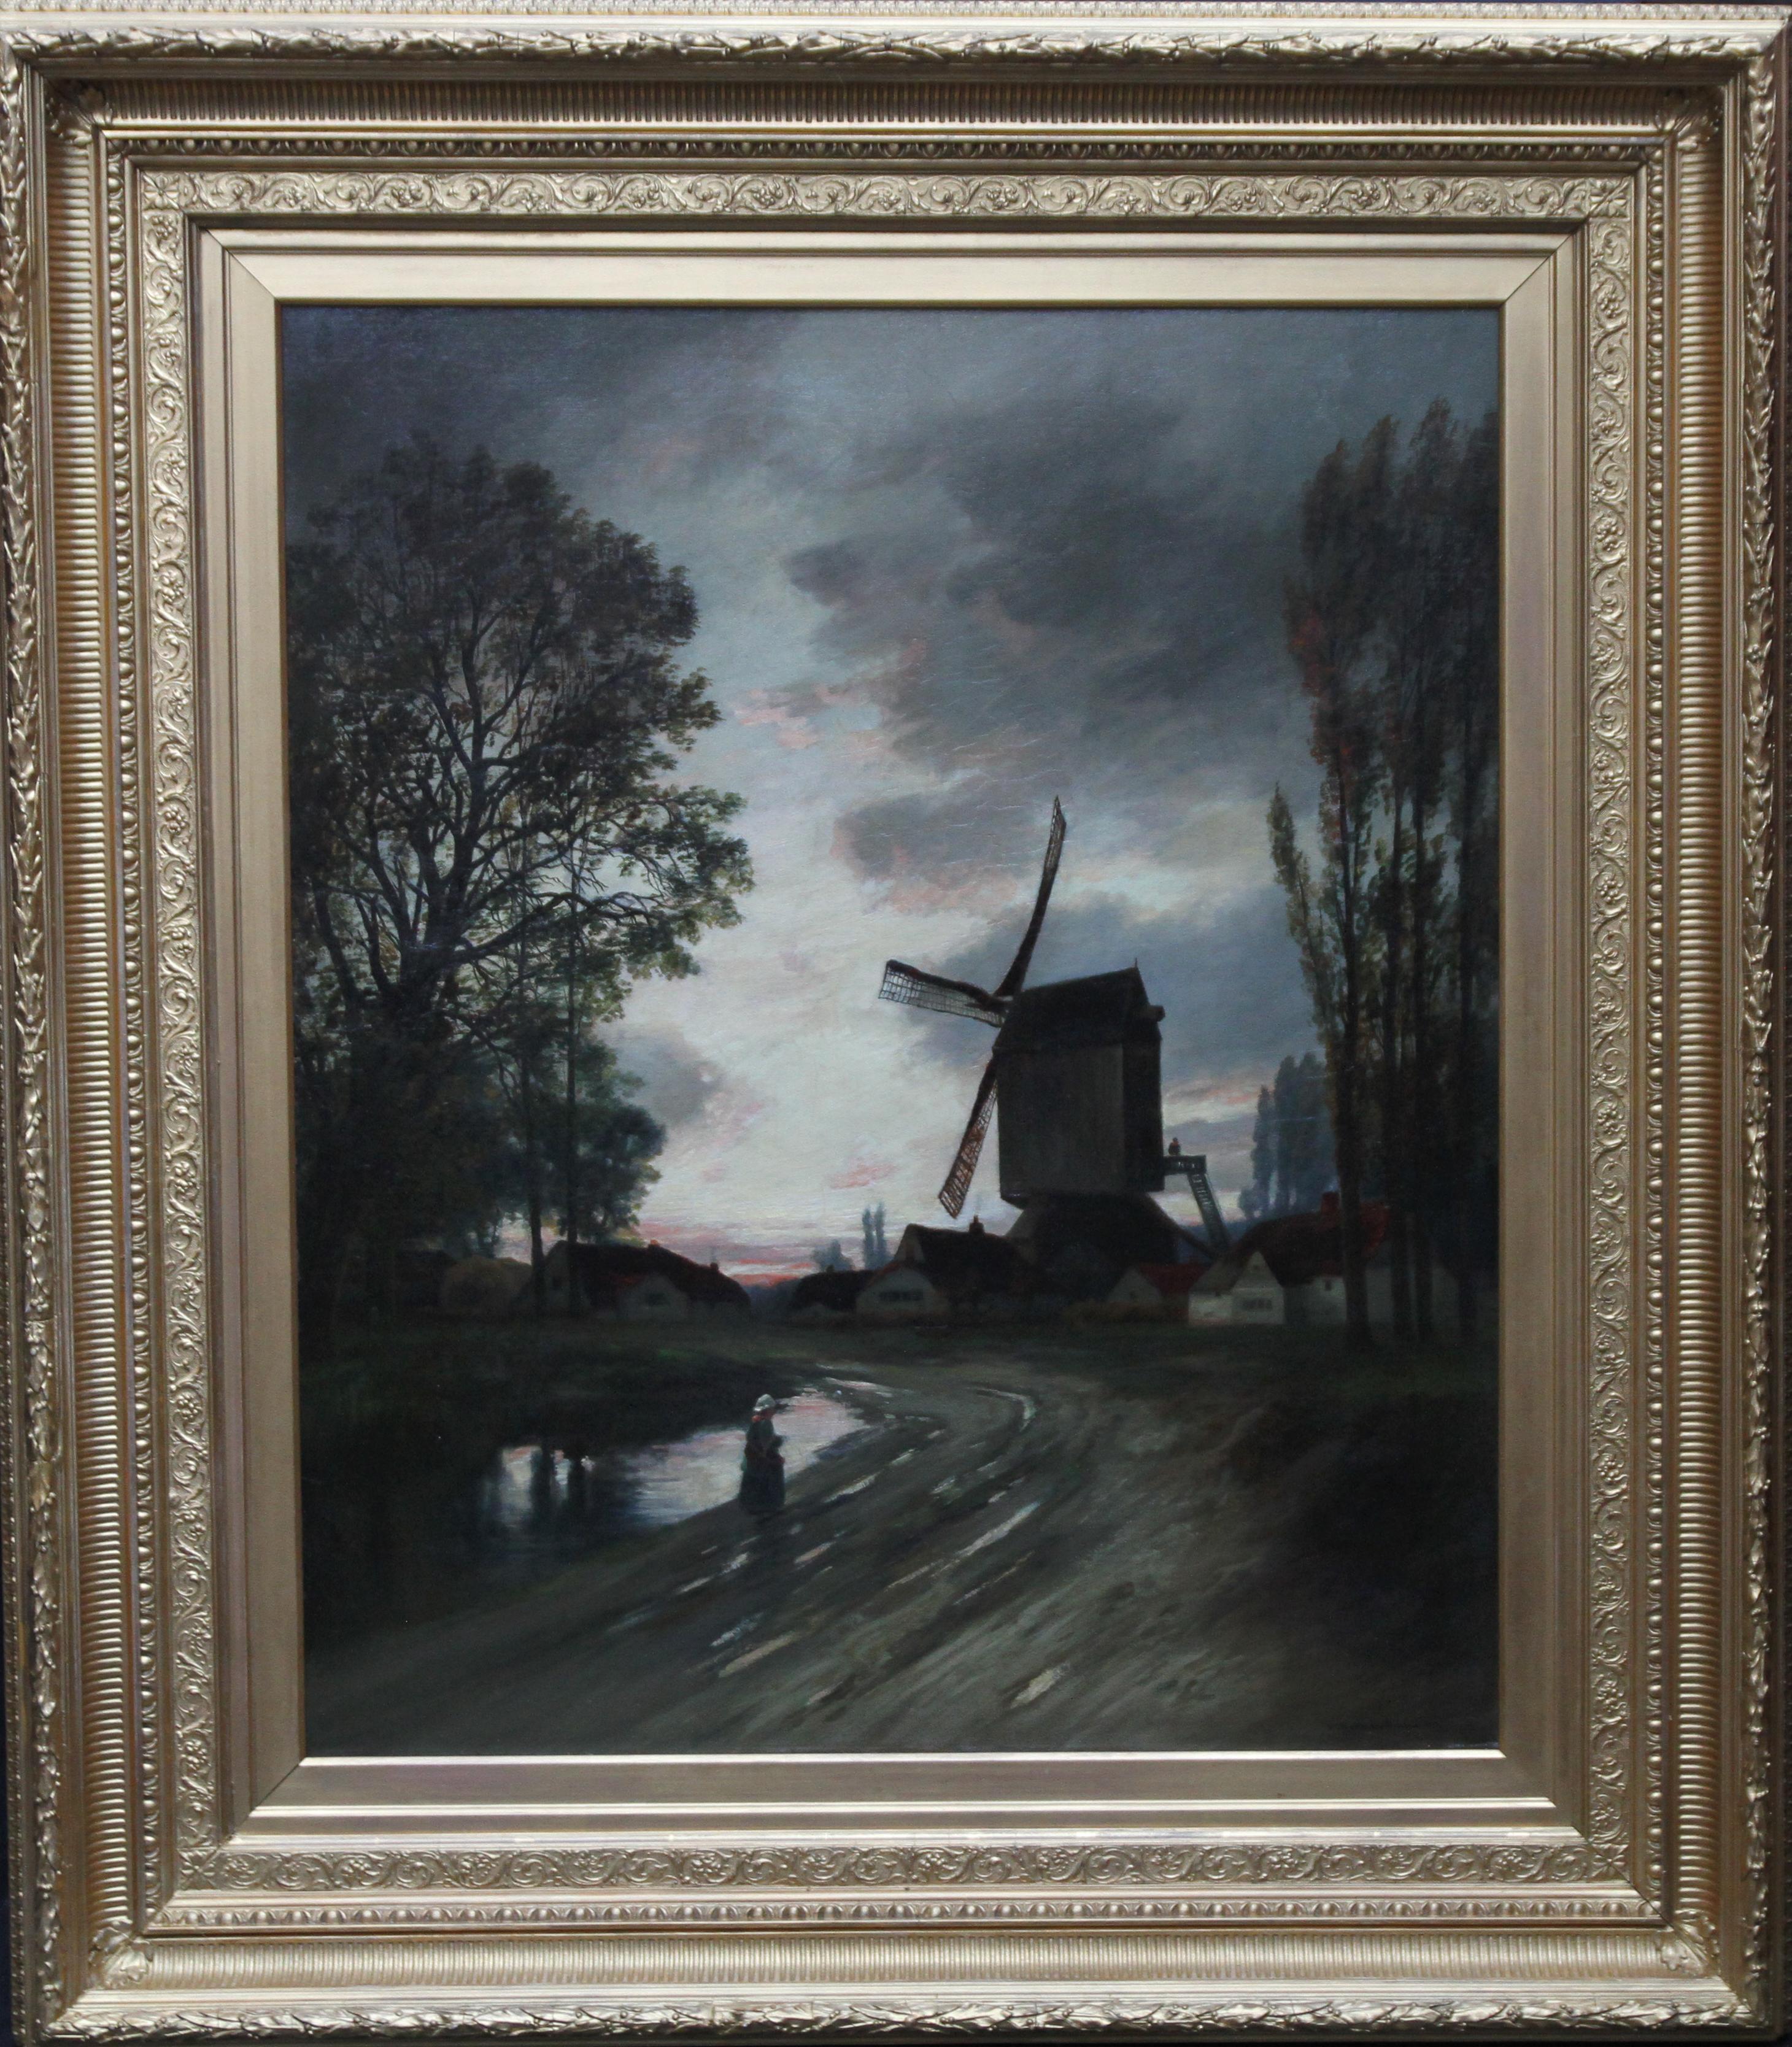 William Beattie-Brown Landscape Painting - The Windmill - Scottish Victorian Impressionist river landscape oil painting art